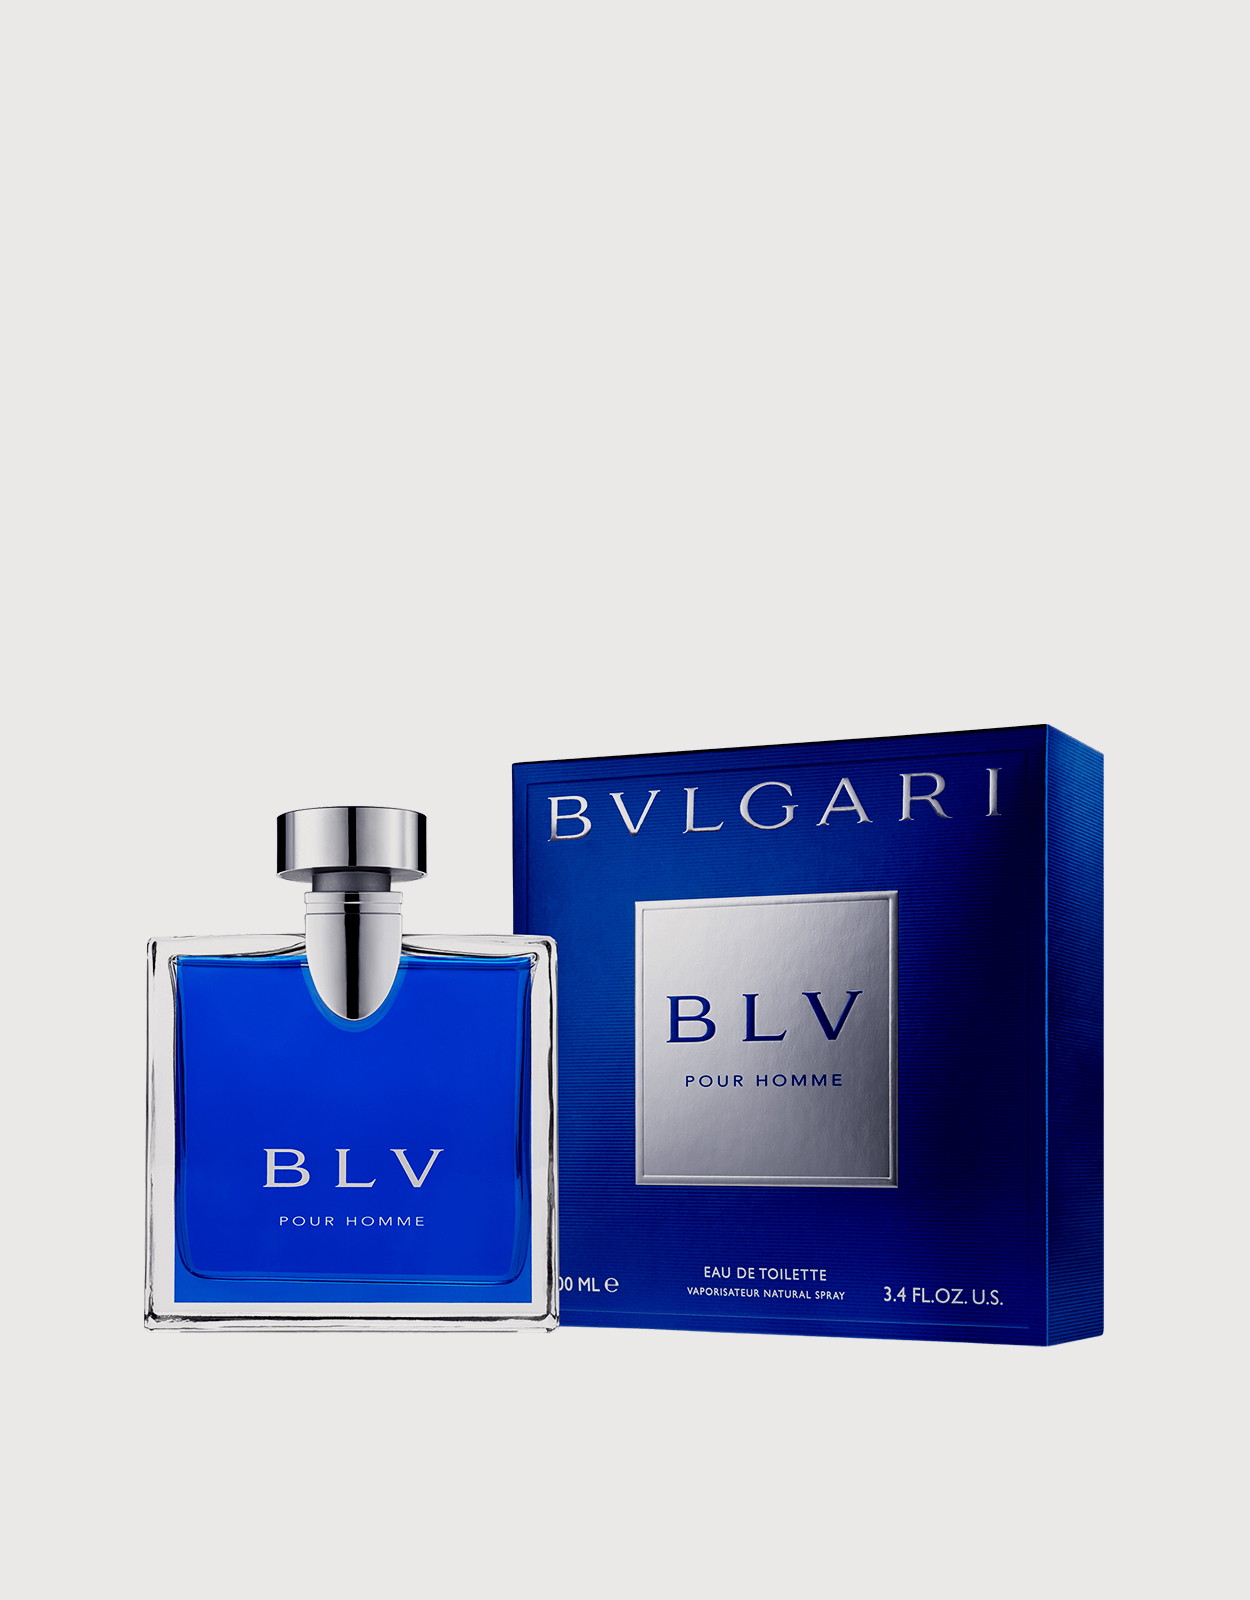 BVLGARI BLV by Bvlgari Eau De Toilette Spray 3.4 oz for Men 